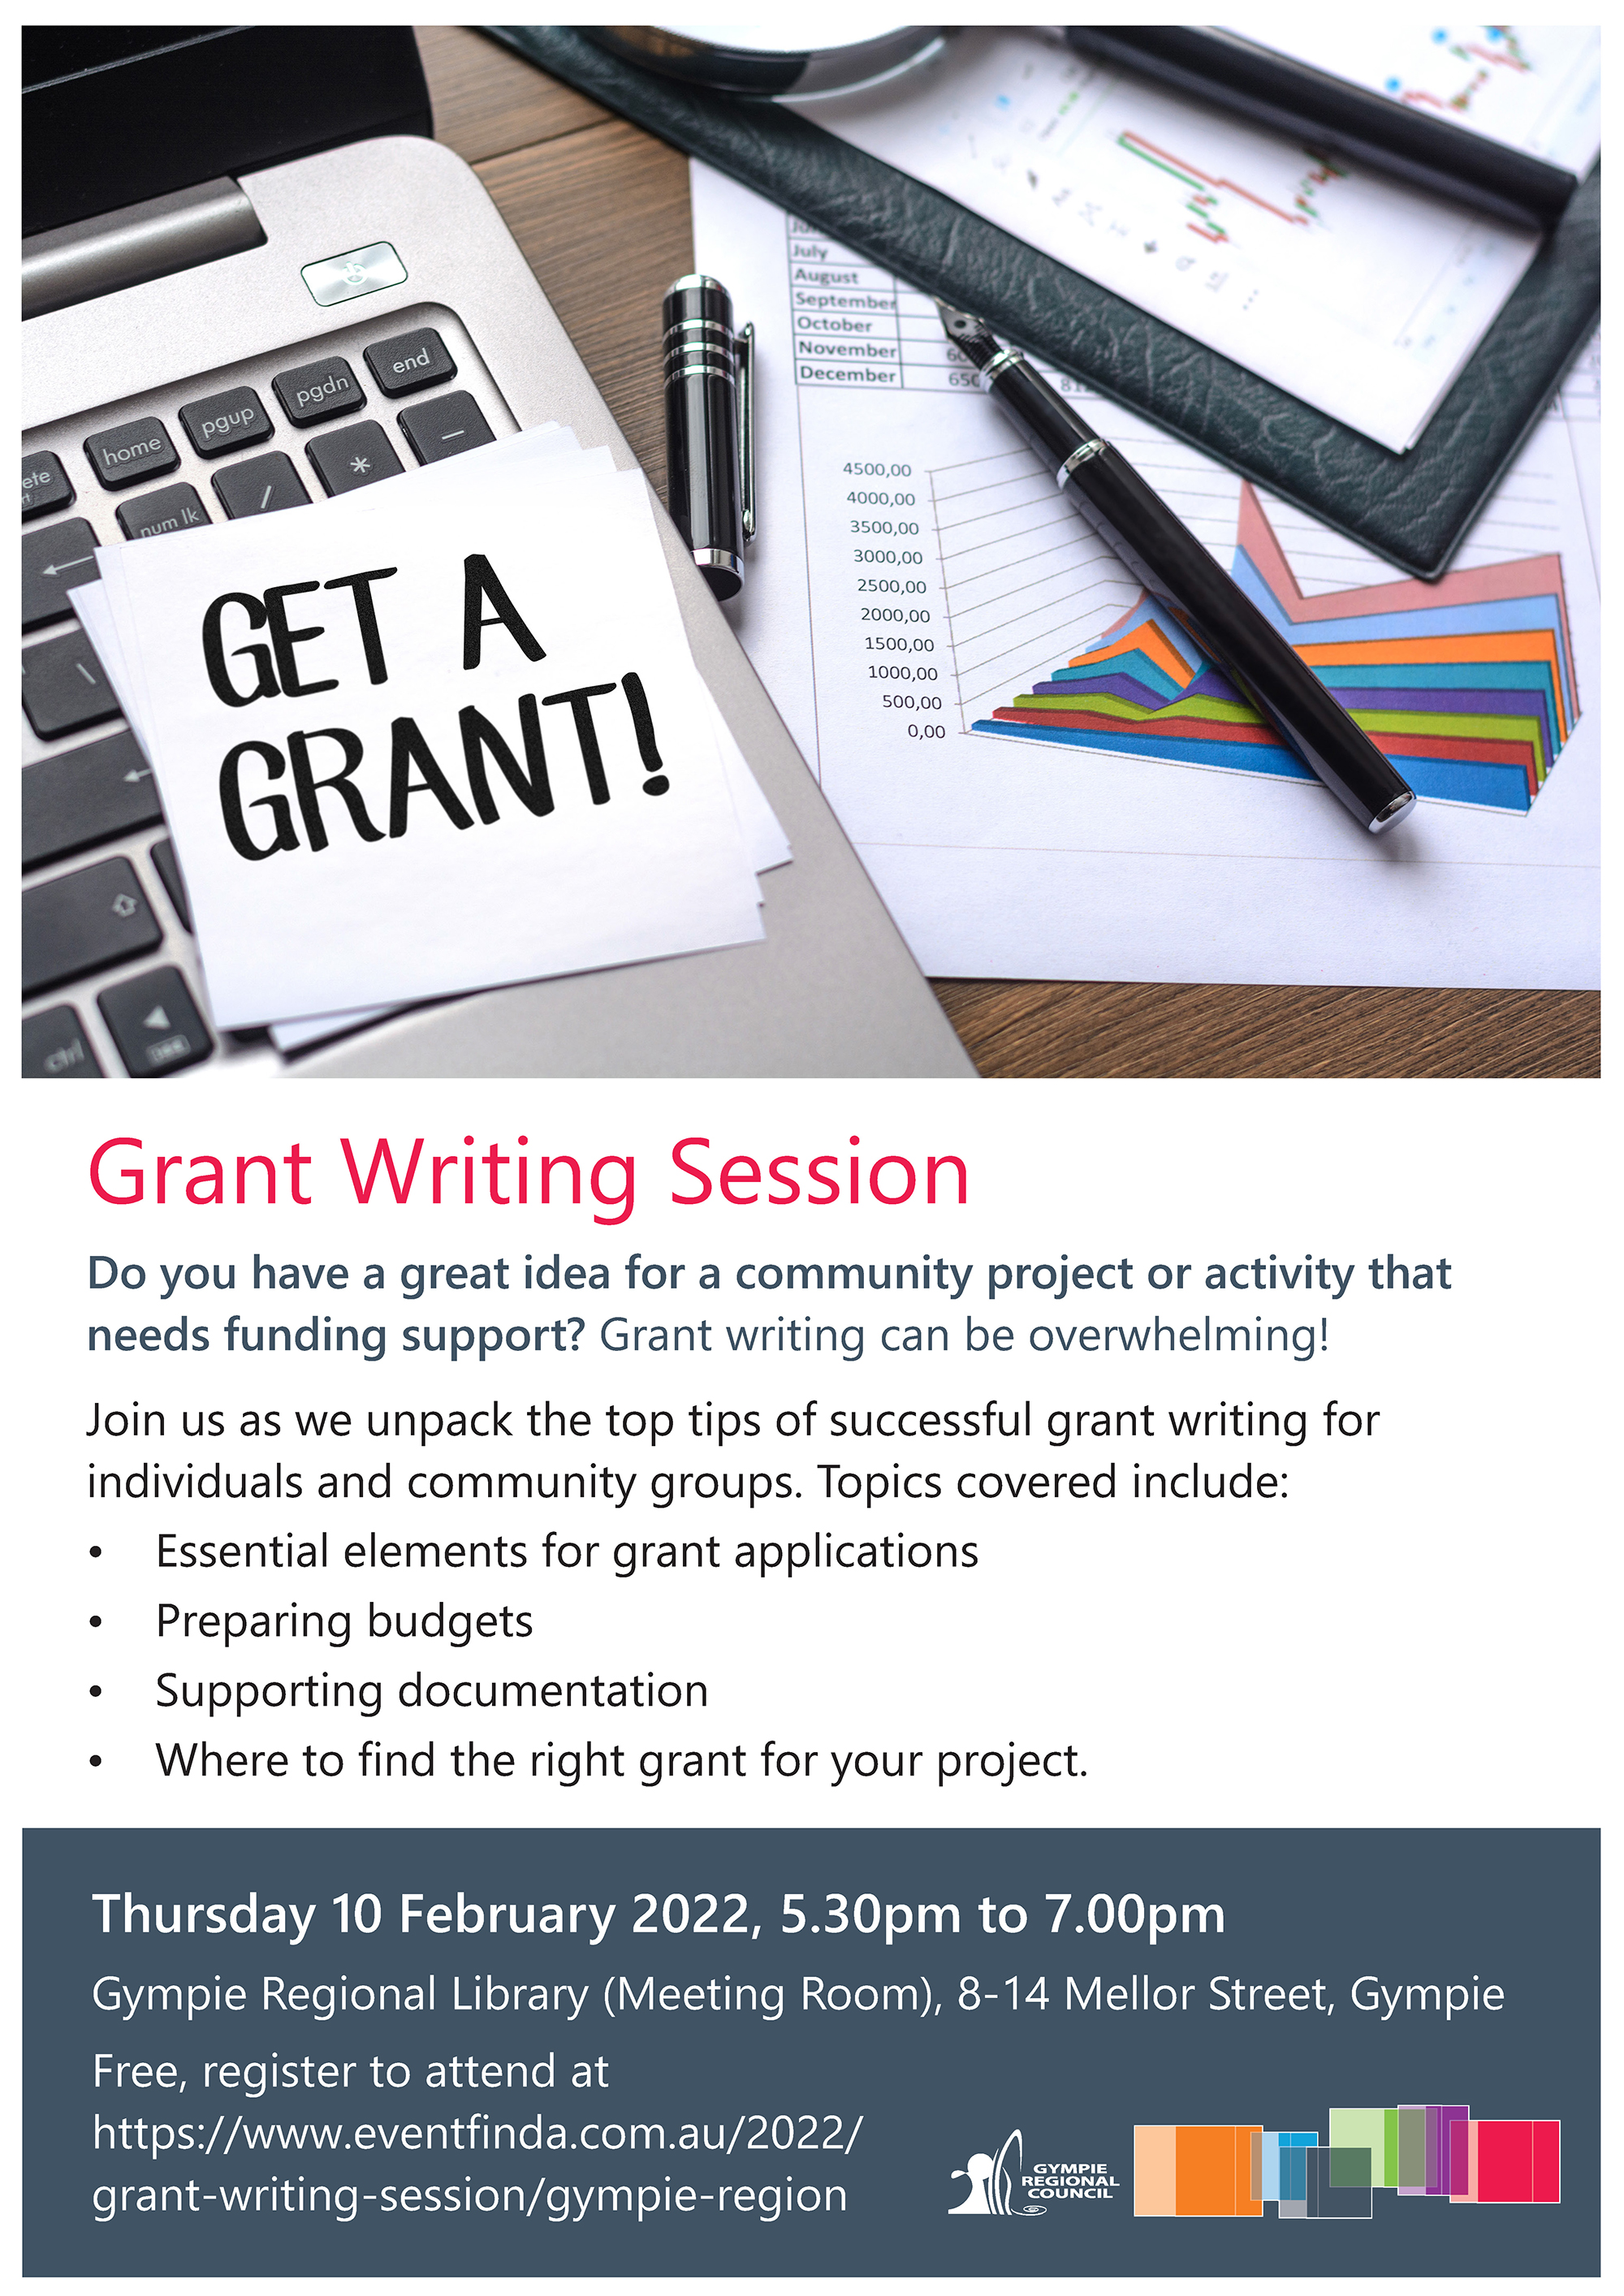 Grants writing session flyer feb 2022